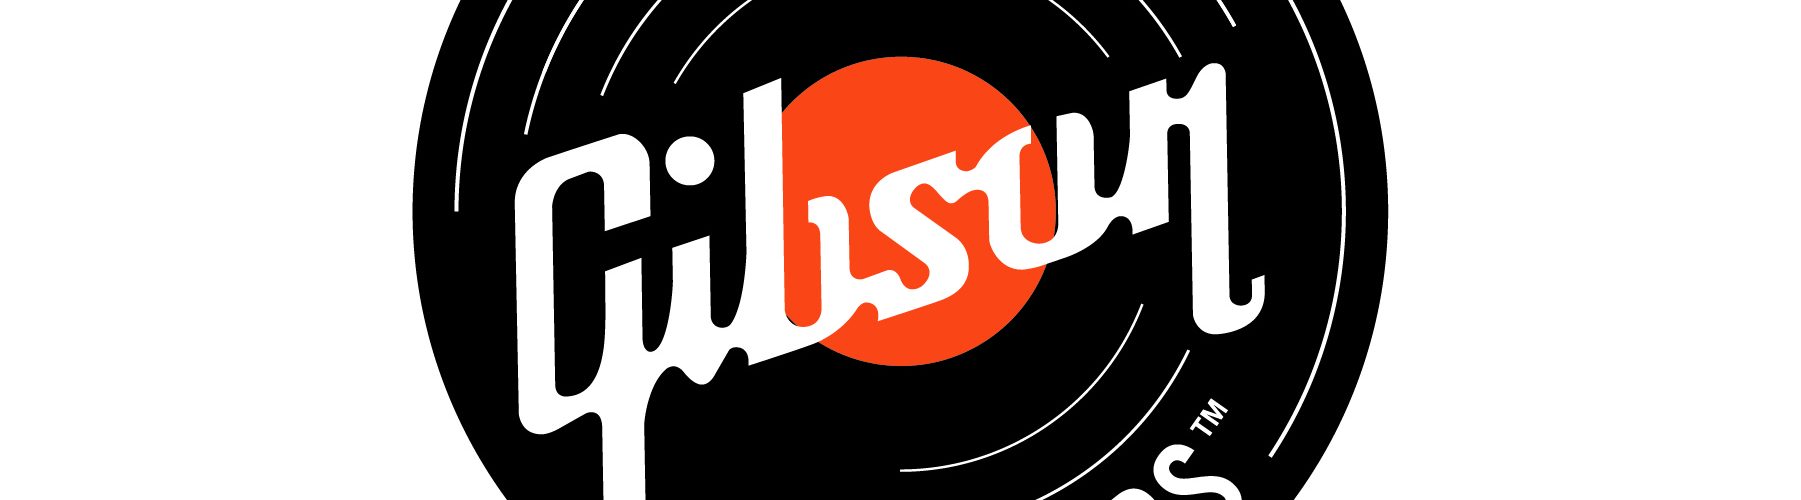 Gibson inaugure son label Gibson Records avec Slash